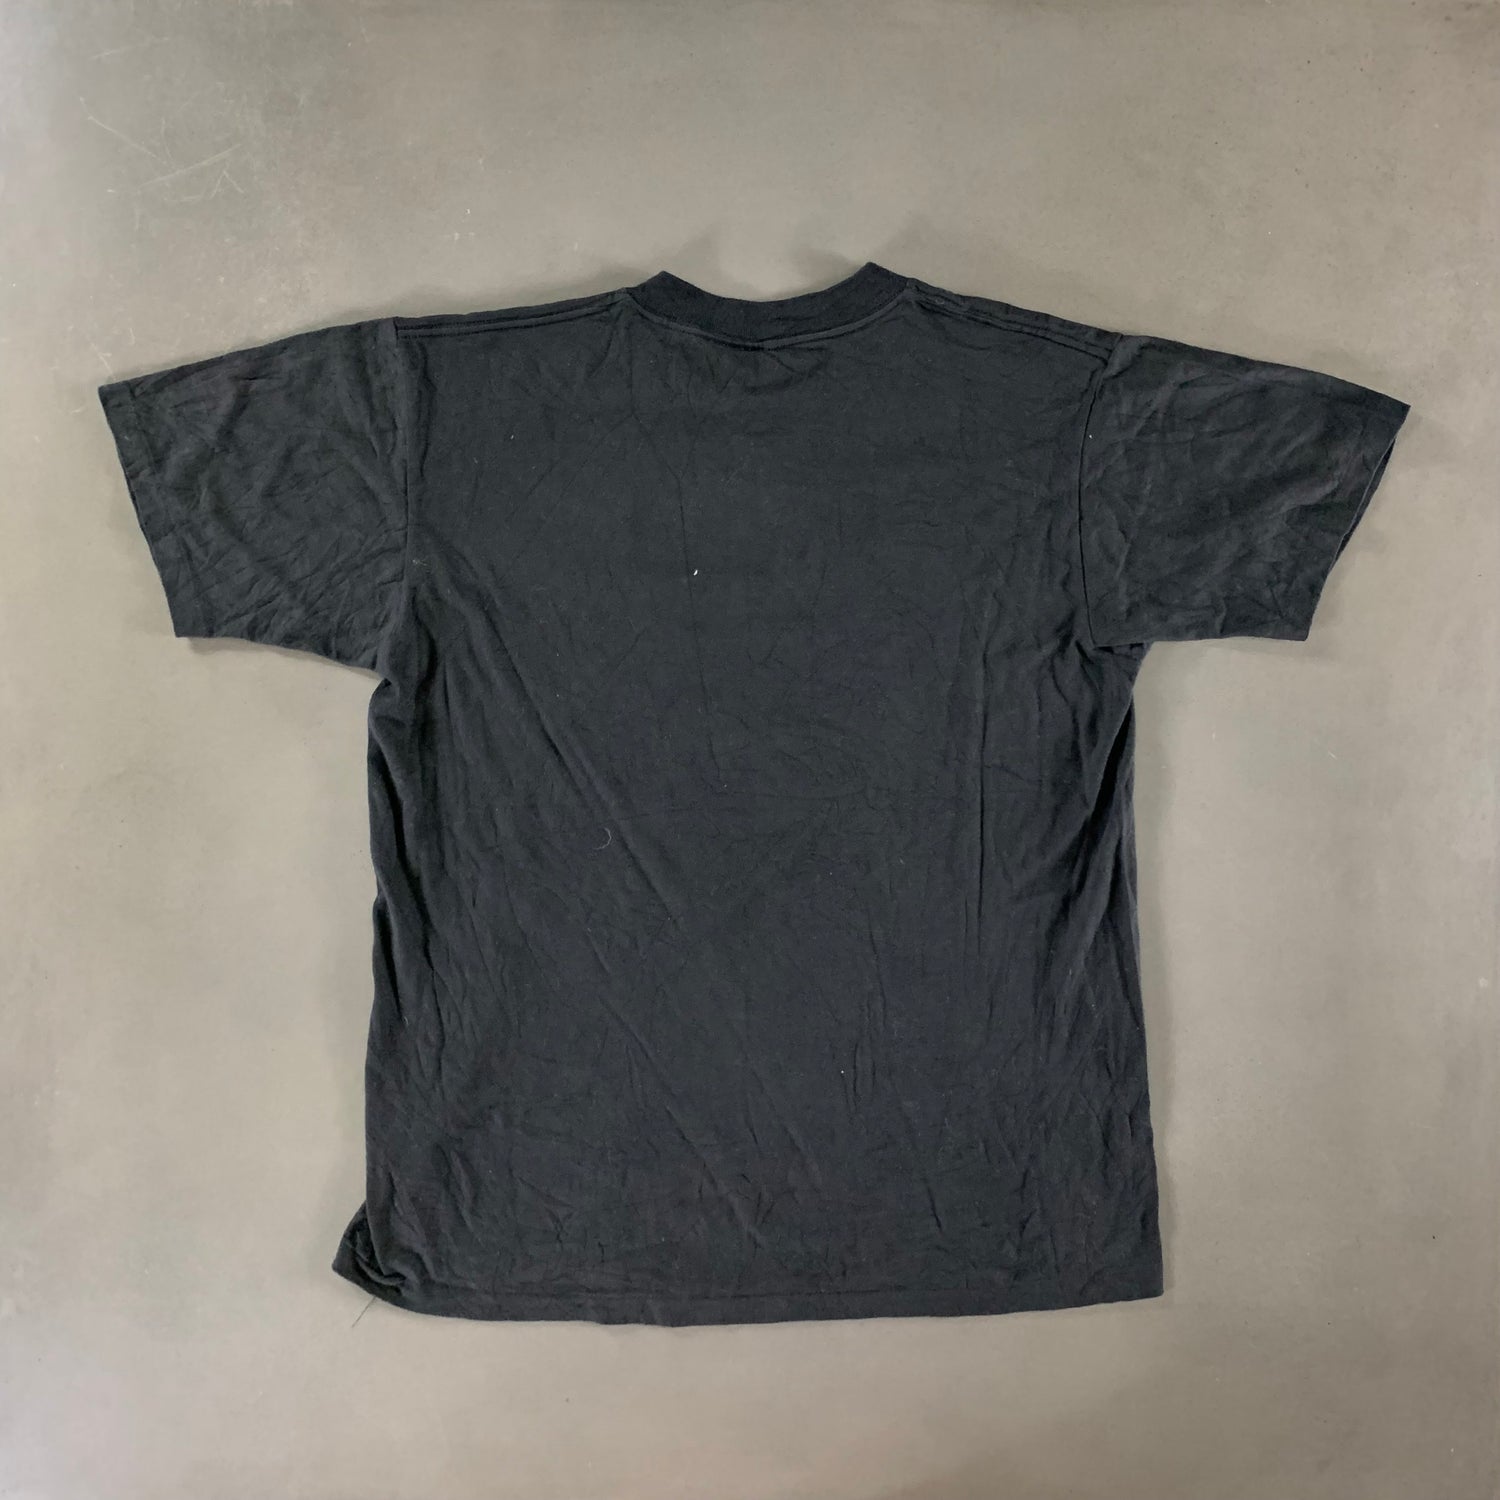 Vintage 1994 Orcas Island T-shirt size Large